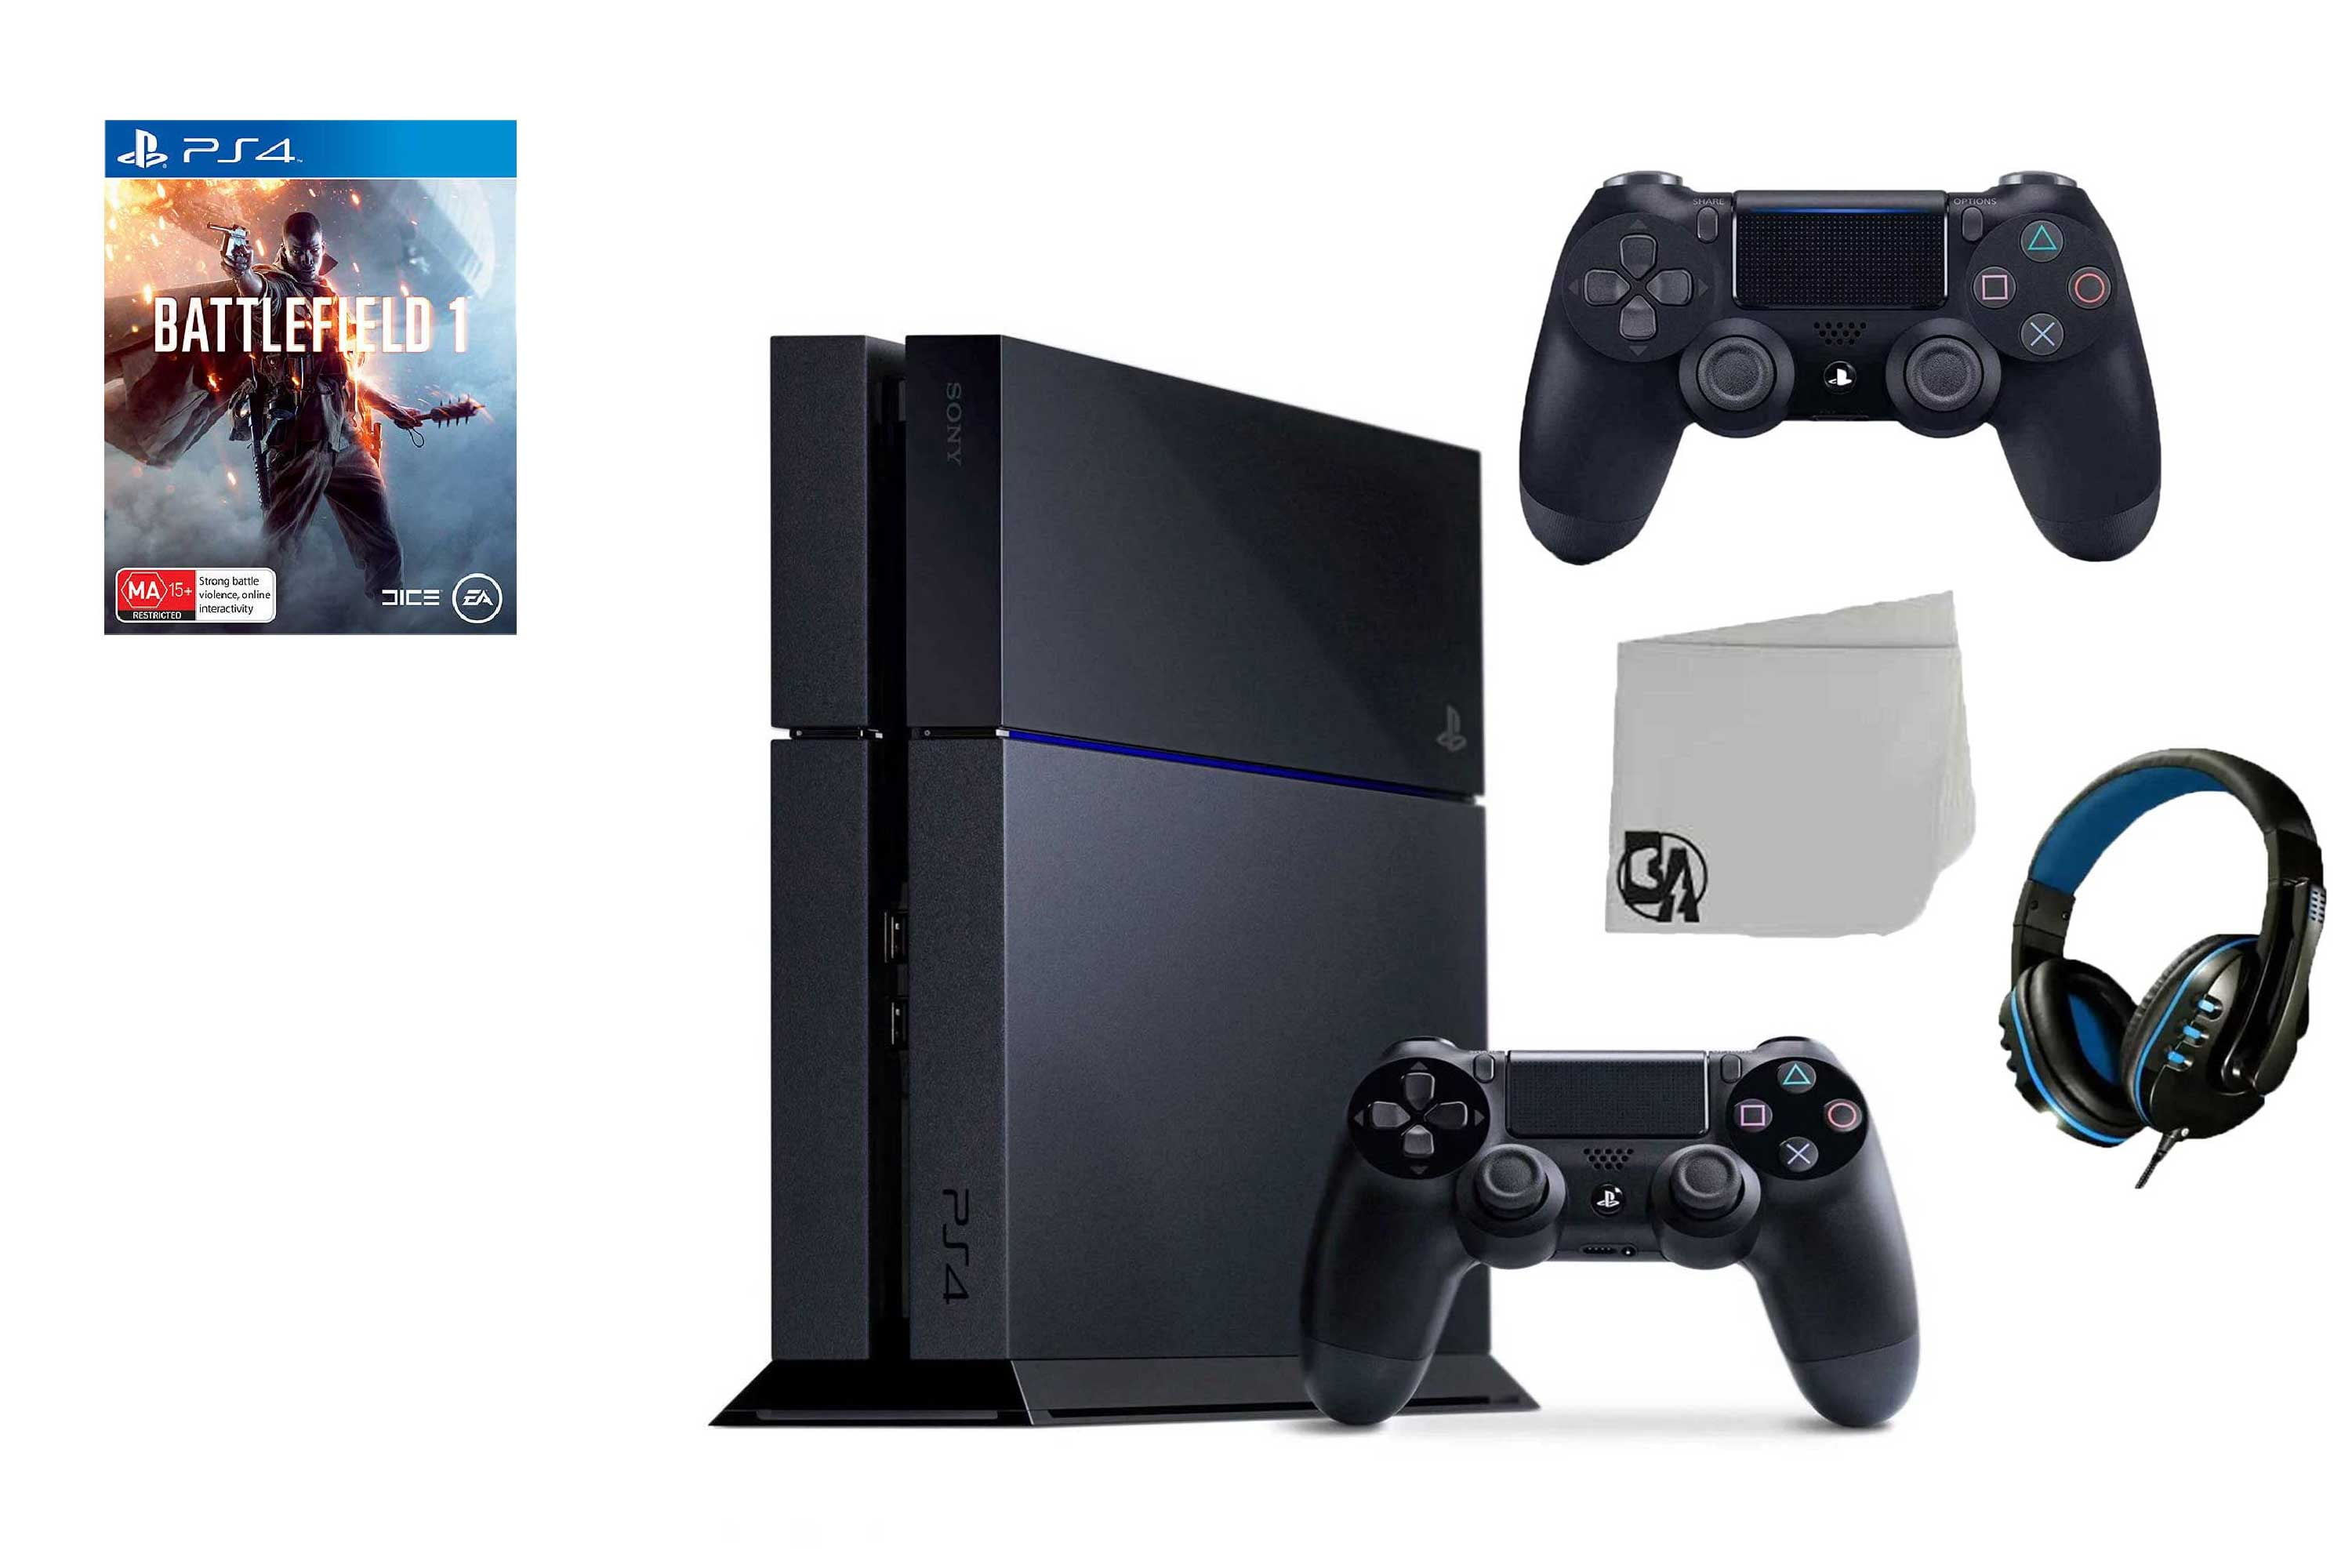 Blacken Vittig Korrupt Sony PlayStation 4 500GB Gaming Console Black 2 Controller Included with Battlefield  1 BOLT AXTION Bundle Like New - Walmart.com